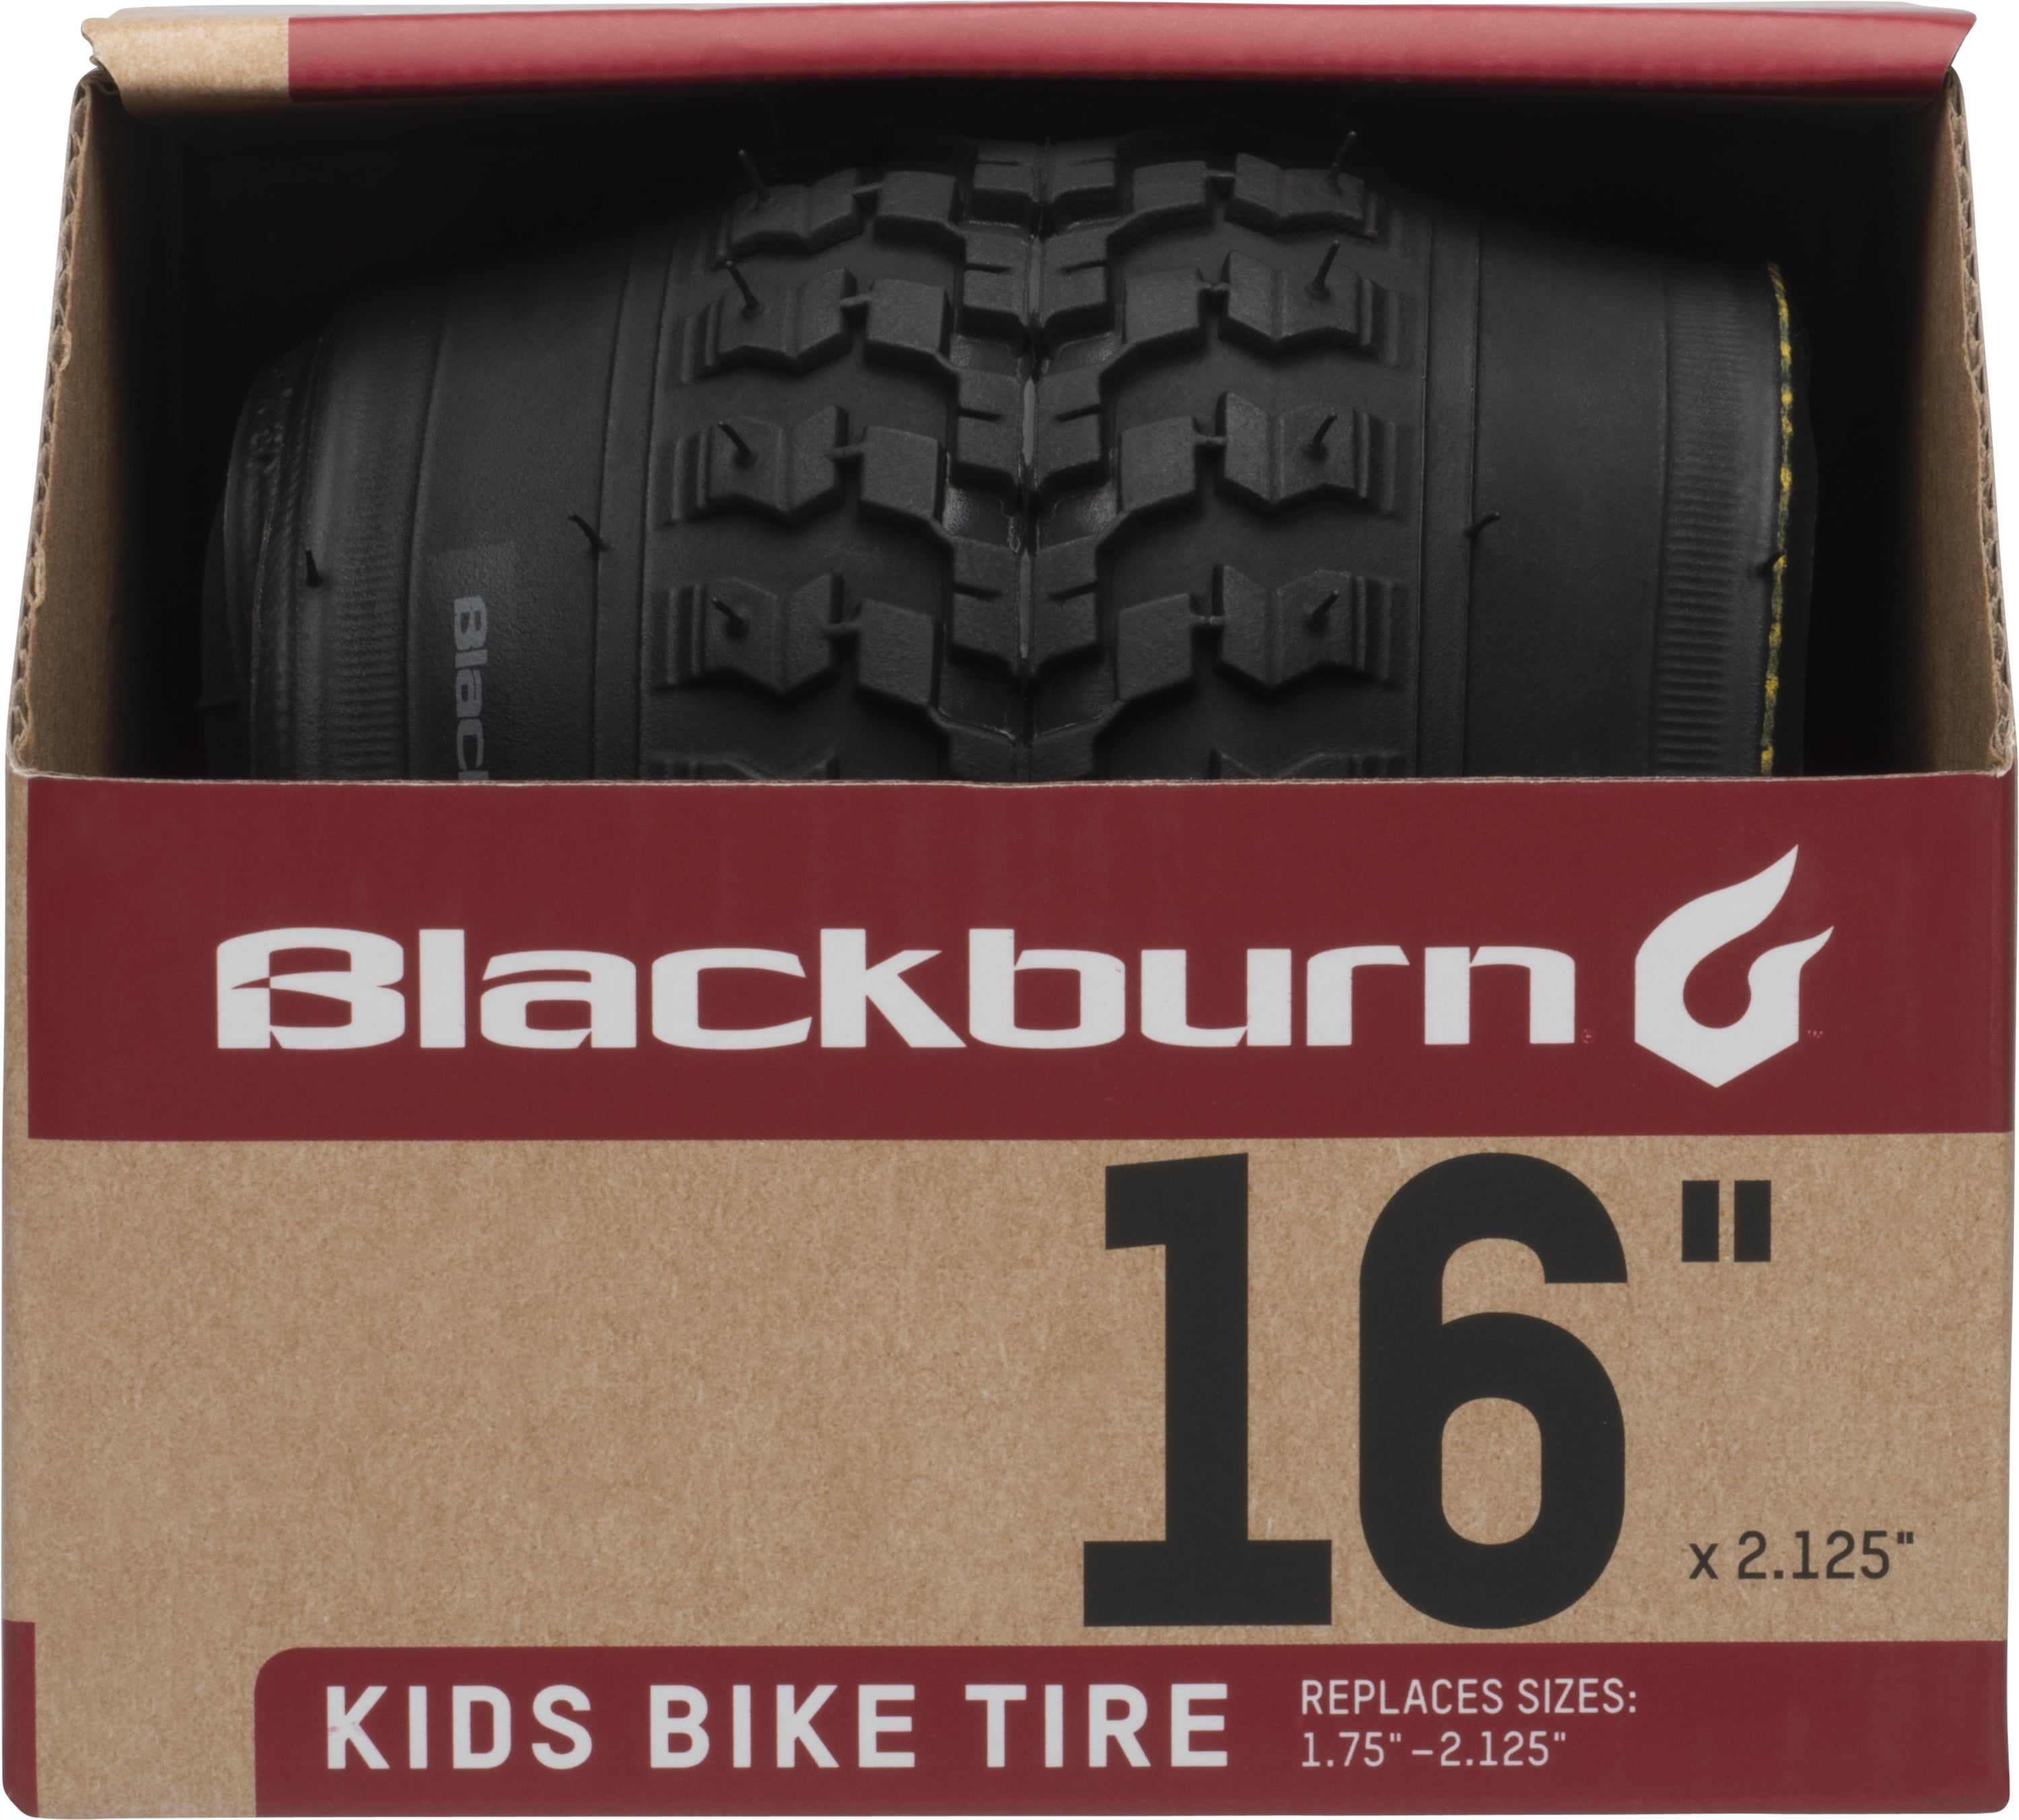 Bell Kids Bike Tire 16” X 2.125” Black Bicycle Tire Fits 1.75”-2.125” 